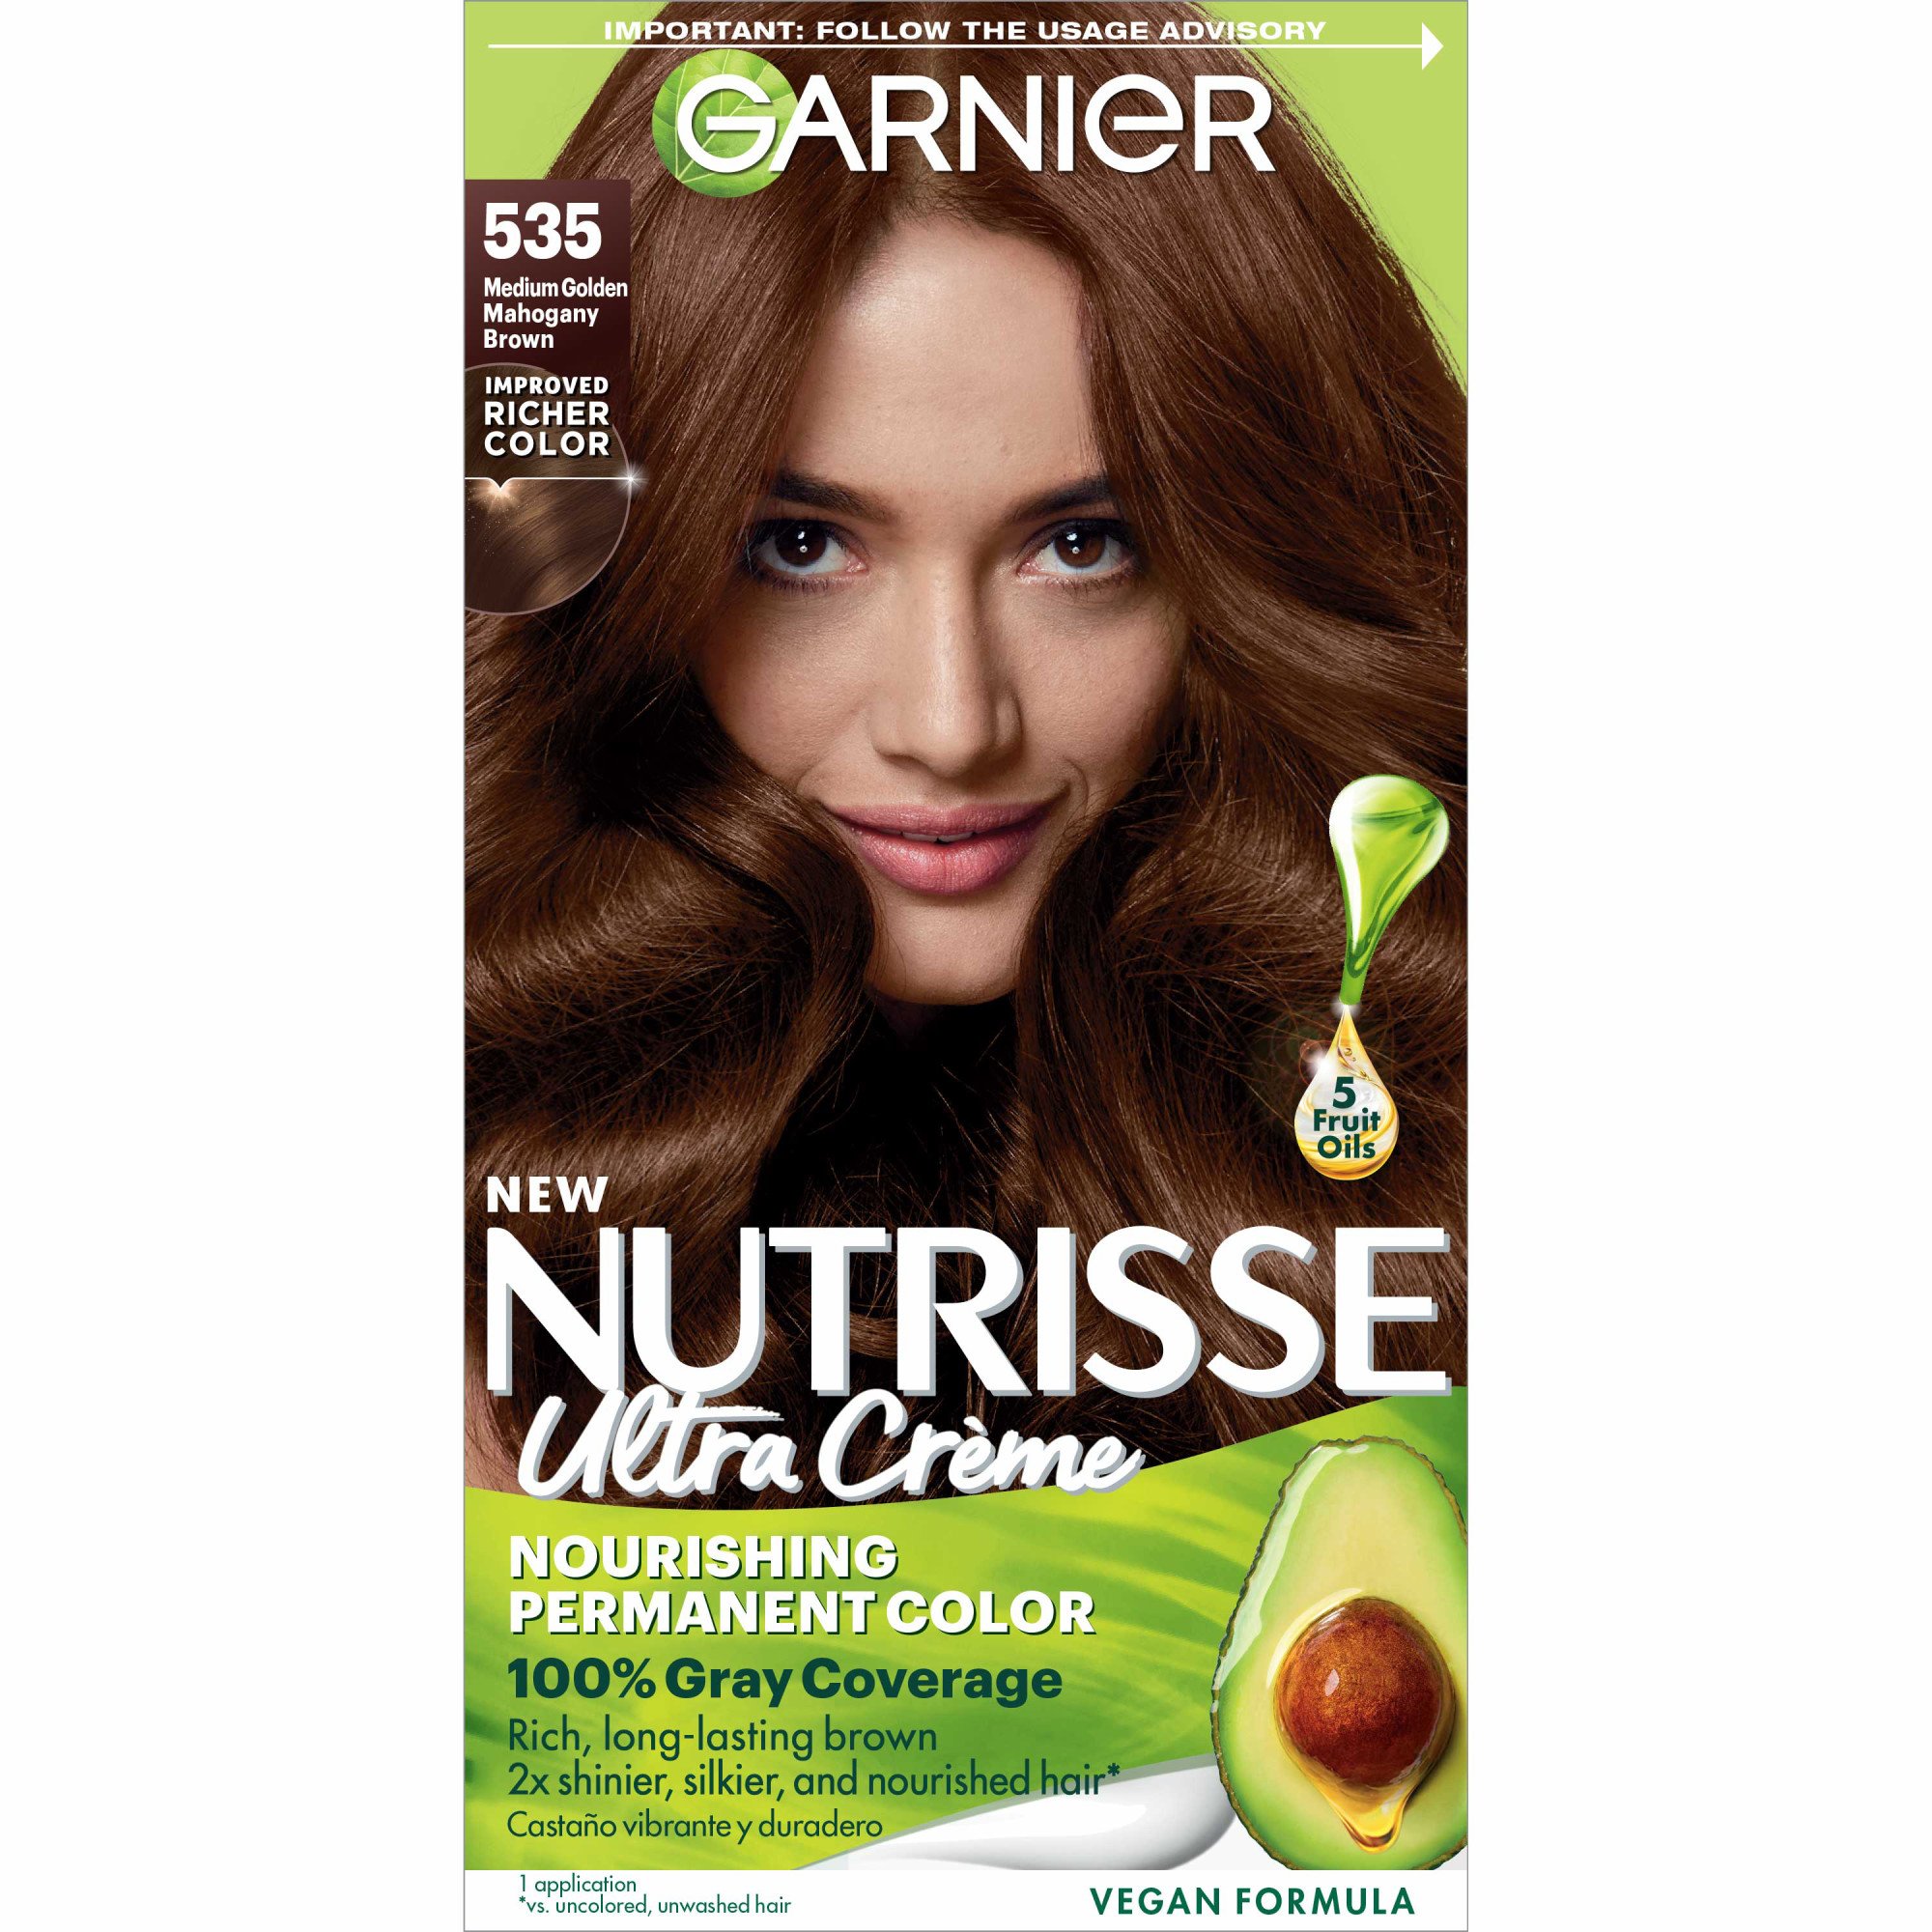 garnier-nutrisse-nourishing-hair-color-creme-535-medium-gold-mahogany